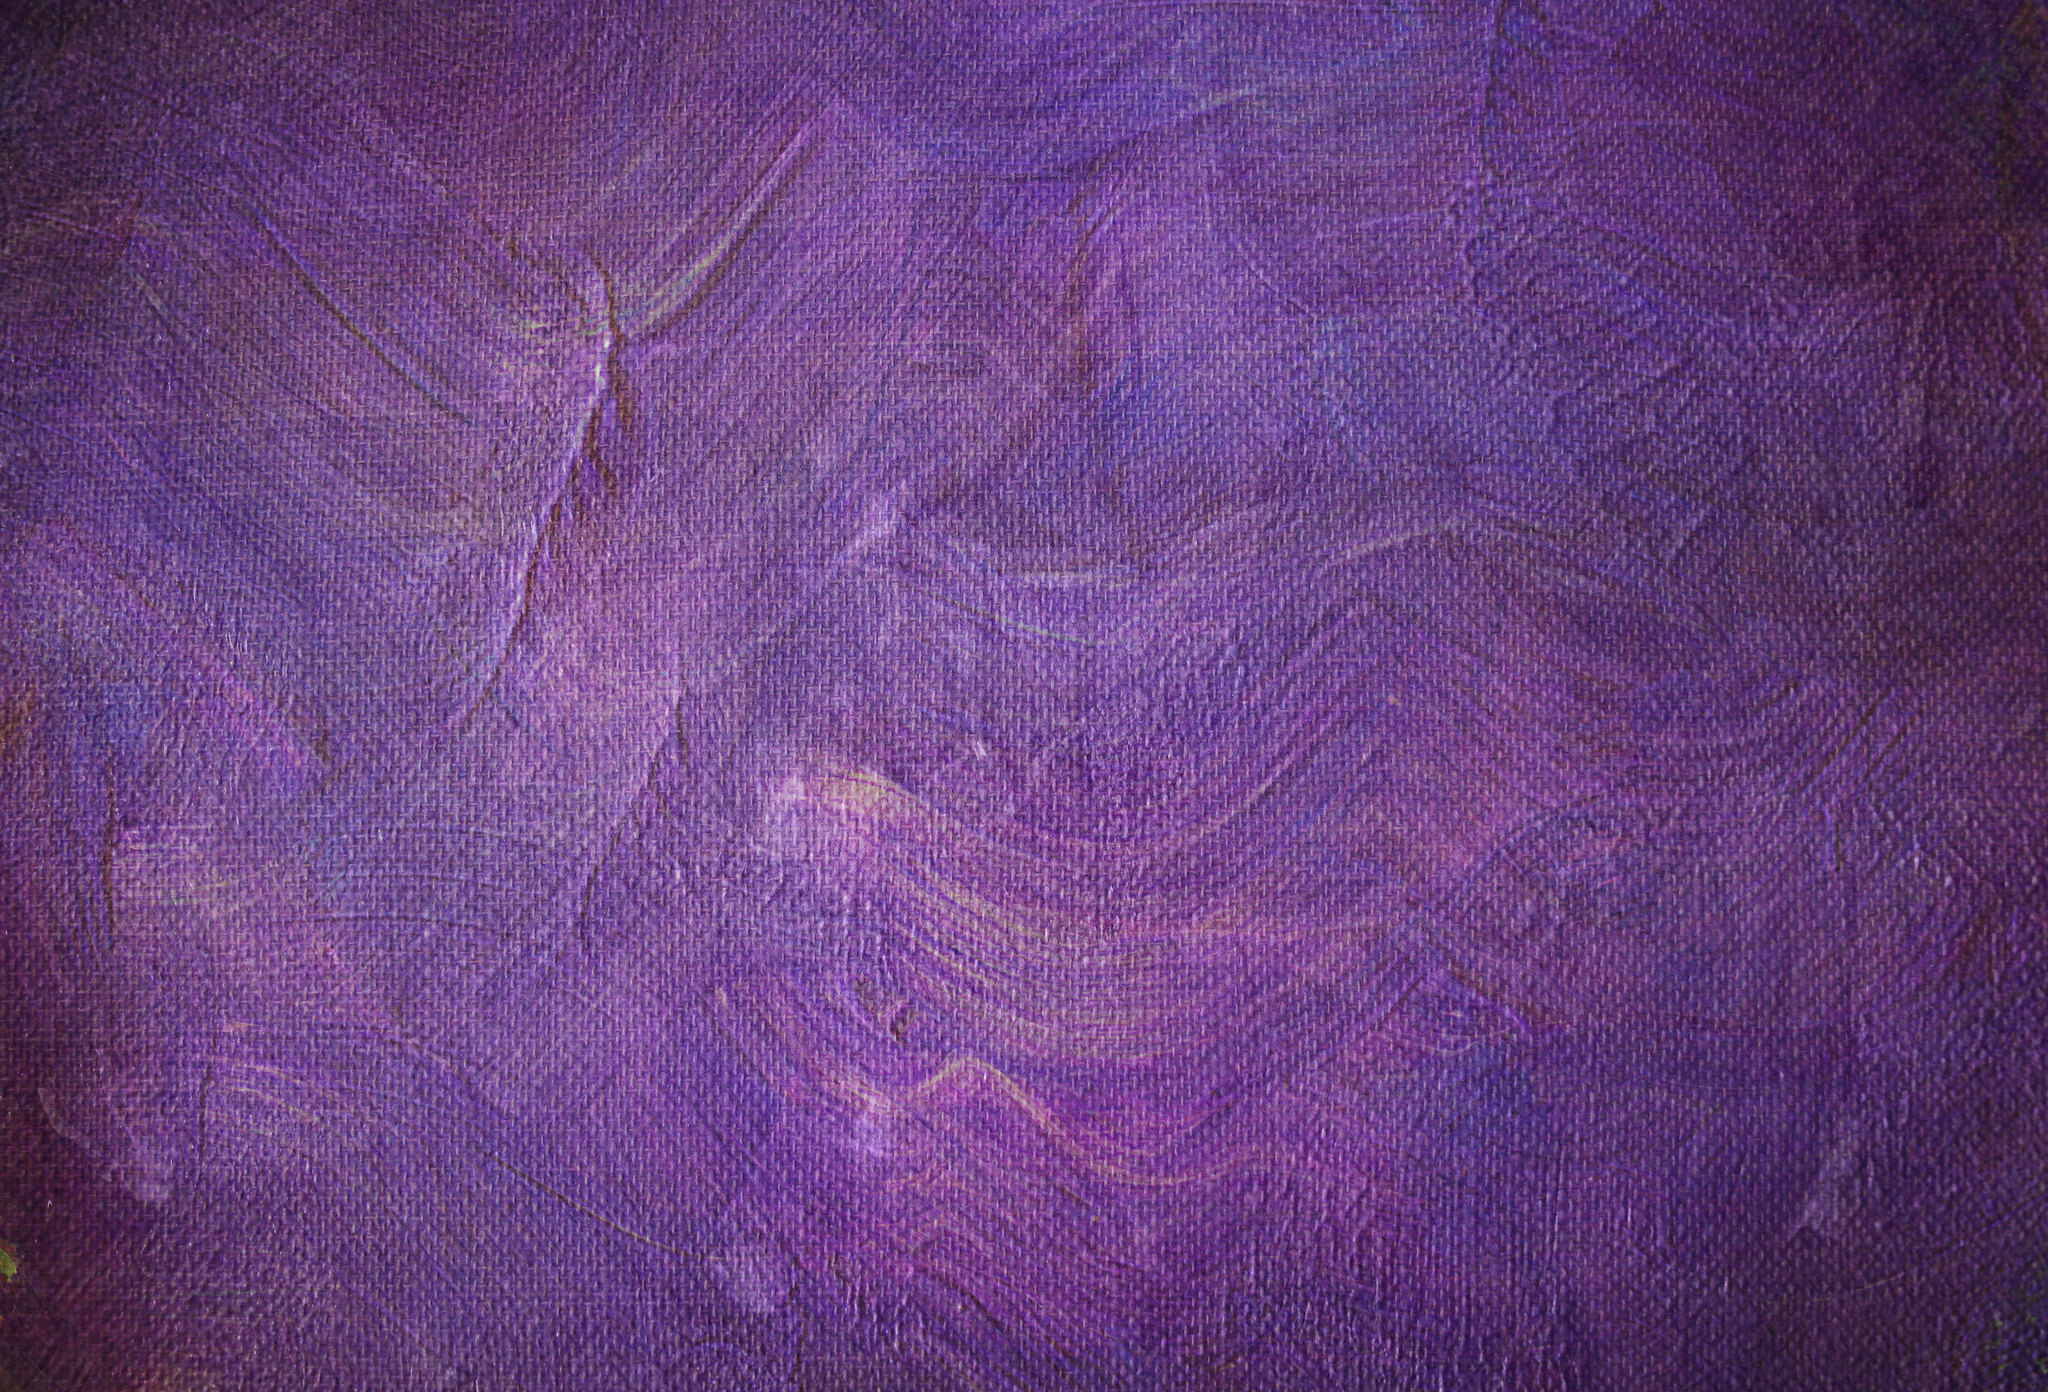 32k Wallpaper Purple violet, textures, smears, strokes